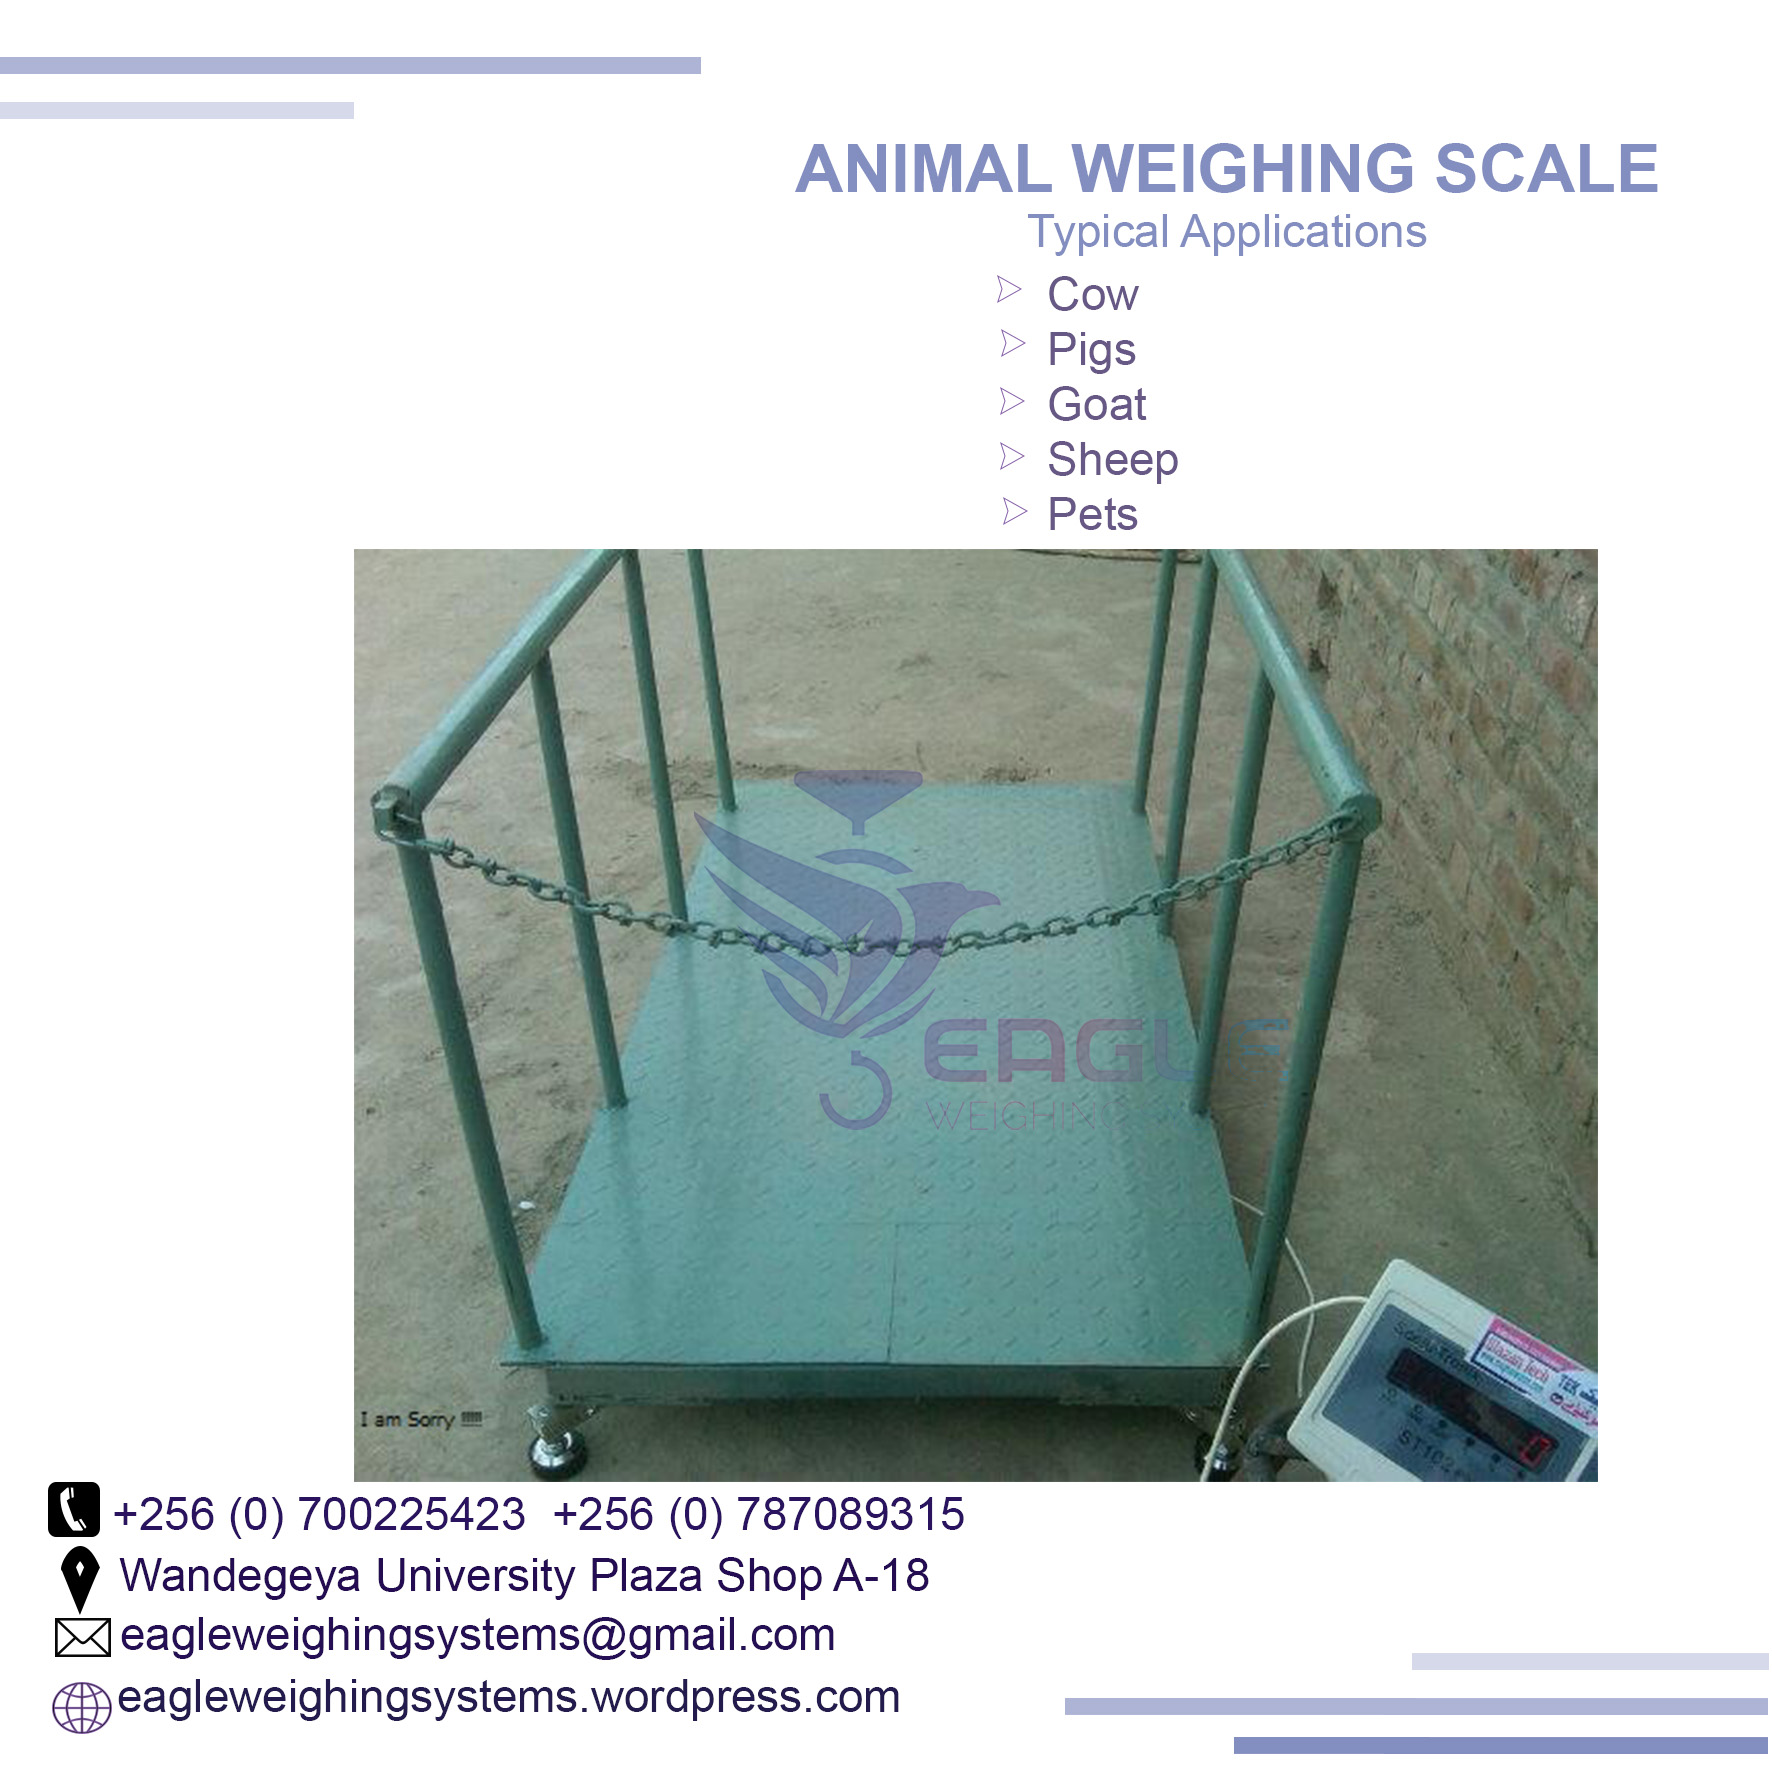 Multi-function animal weighing indicators company in Uganda, Kampala Central Division, Central, Uganda